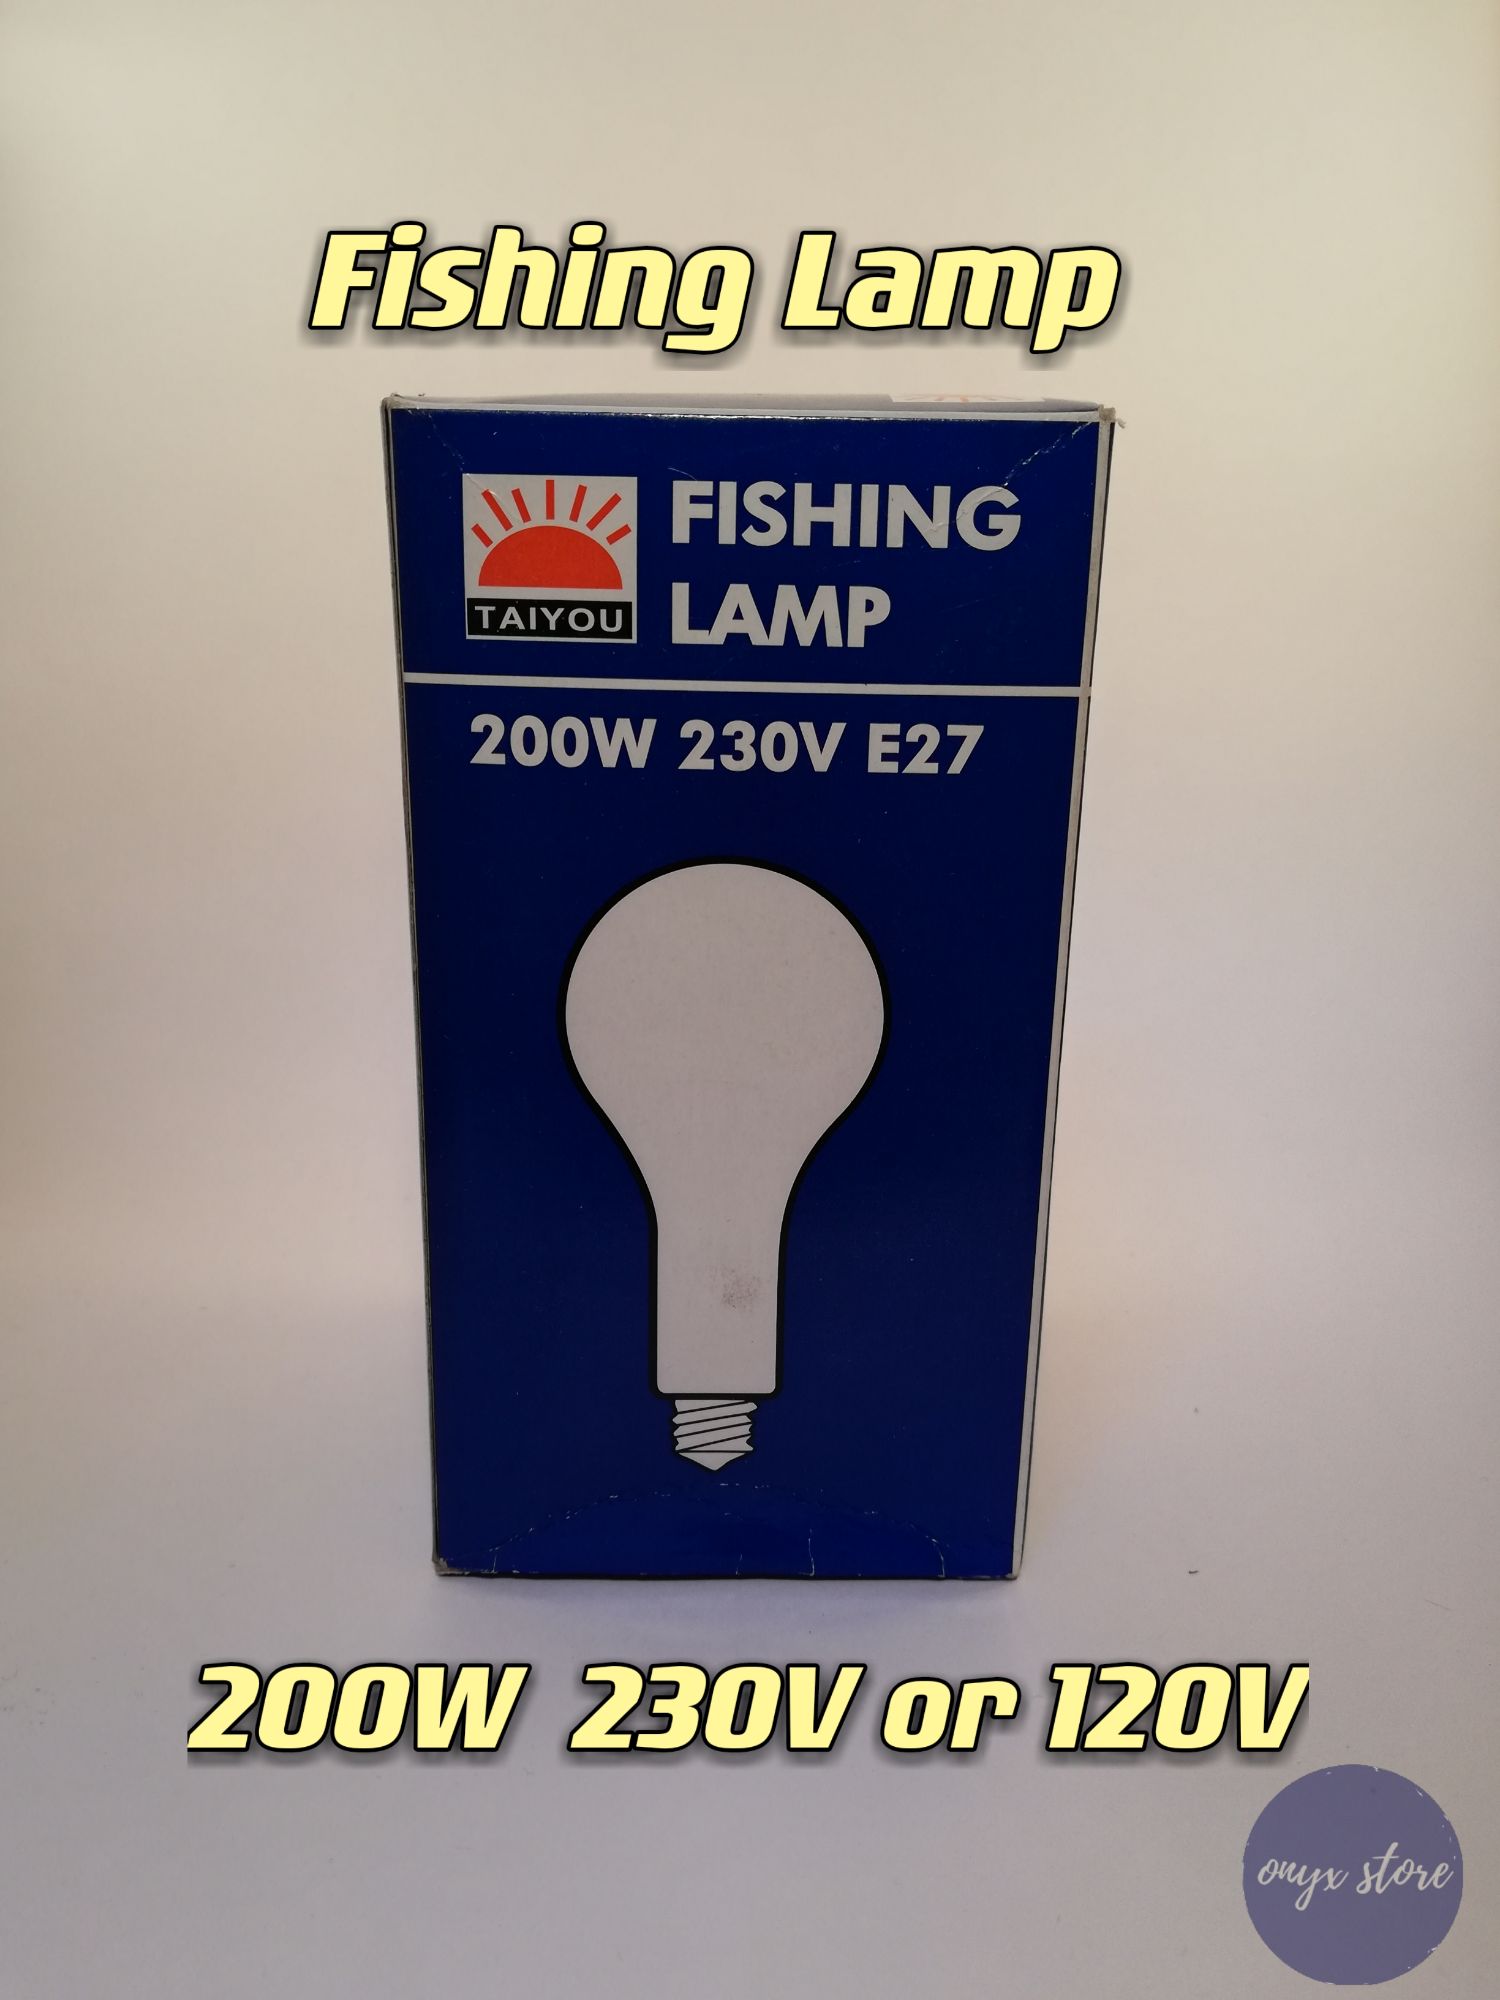 Taiyou Fishing Lamp / Fishing Bulb 200W, 230V or 120V